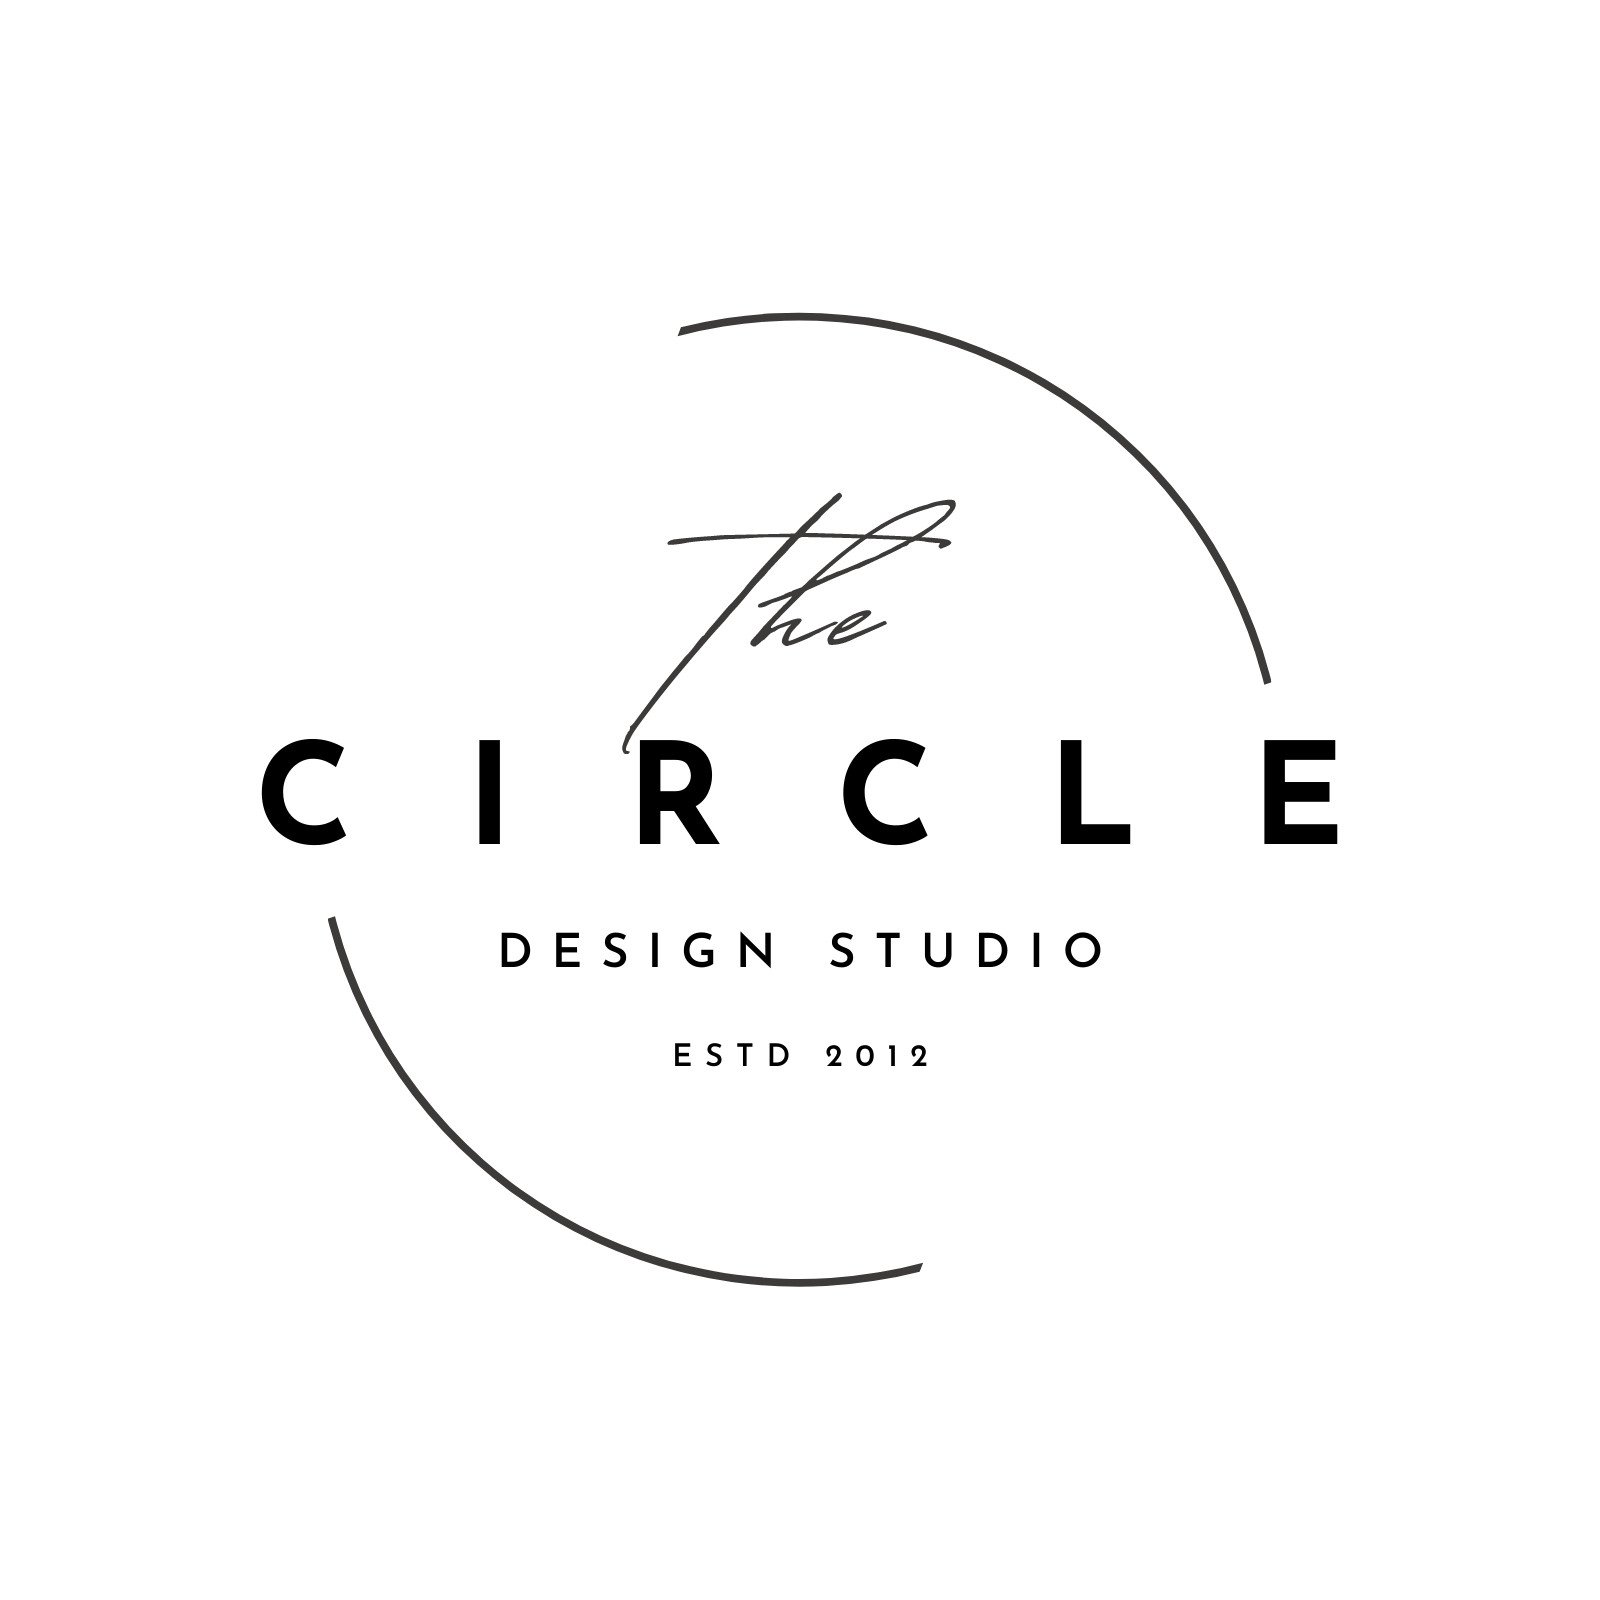 https://marketplace.canva.com/EAFYOuP8JZY/1/0/1600w/canva-free-simple-modern-circle-design-studio-logo-O1RnI0wALgo.jpg